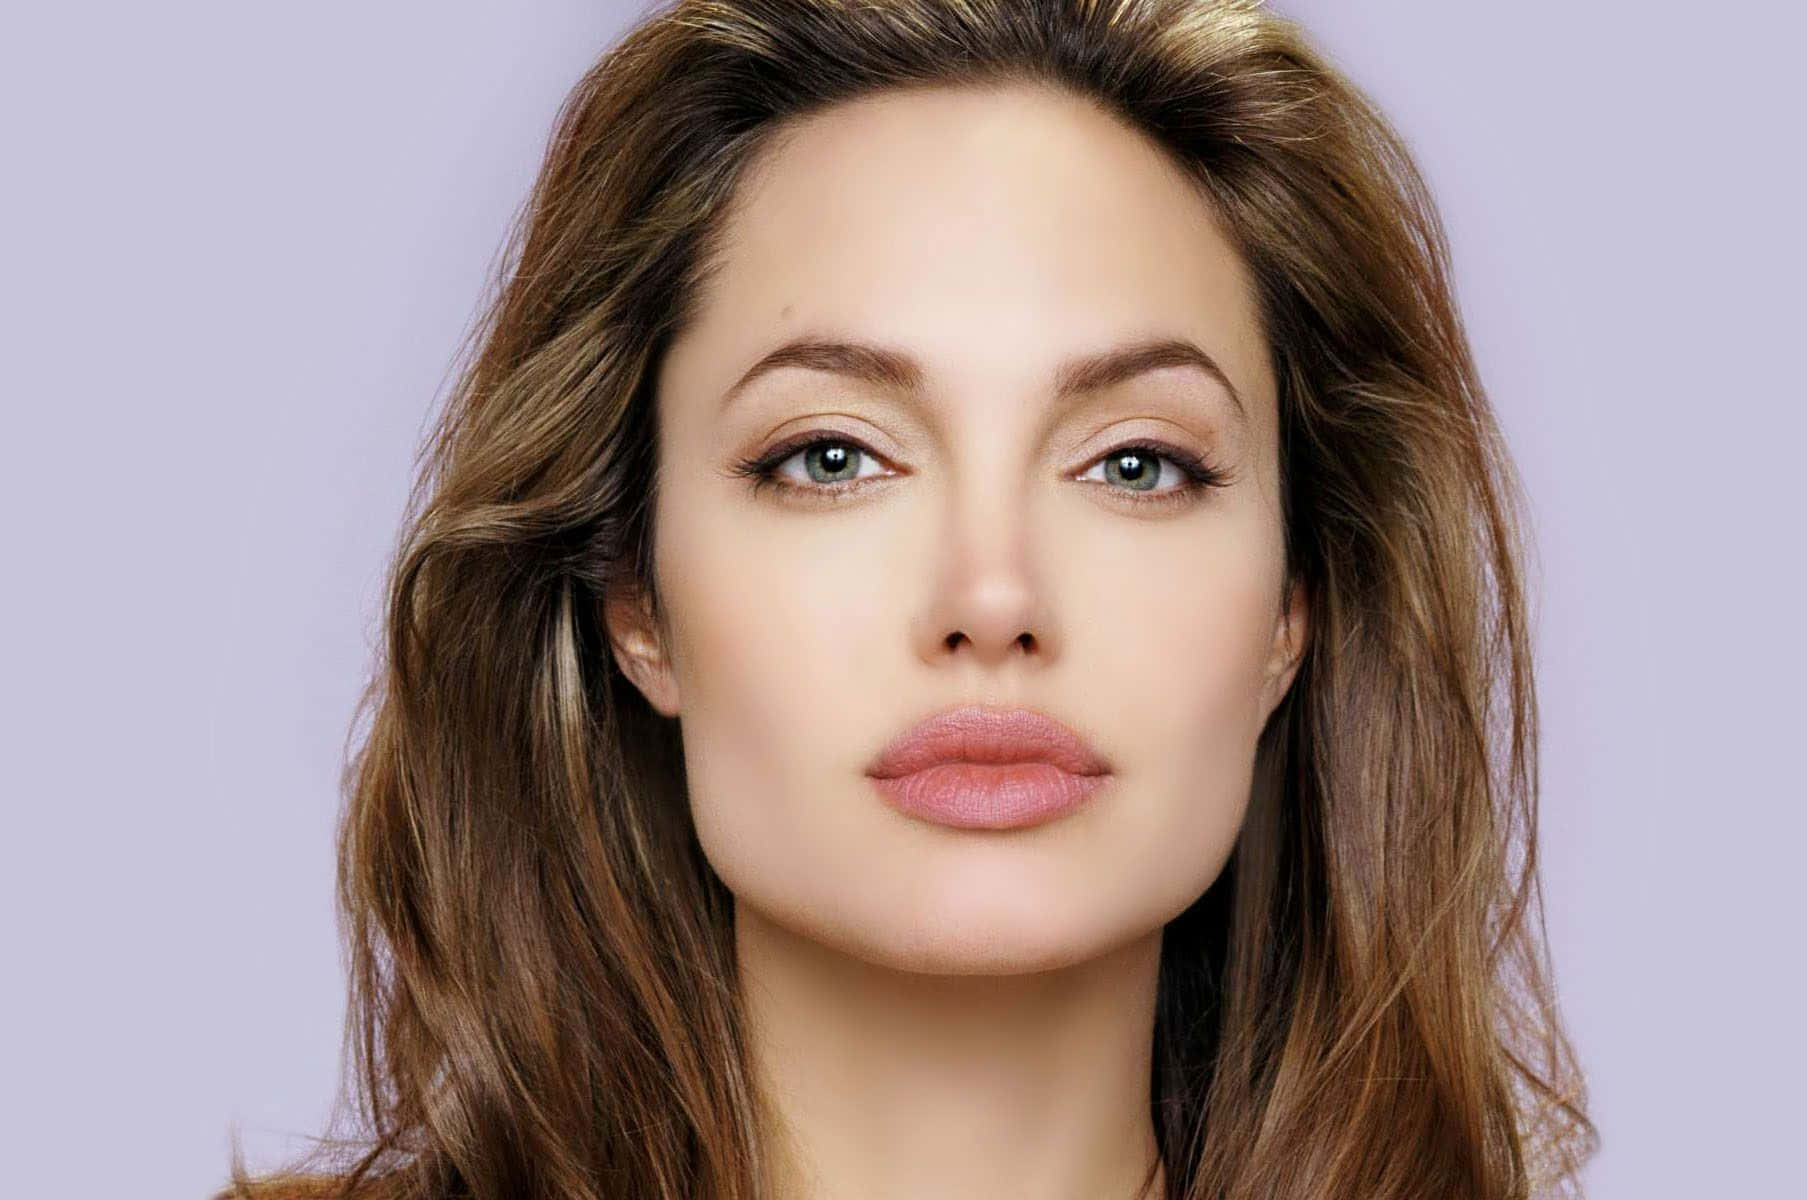 Hintergrundbildvon Angelina Jolie